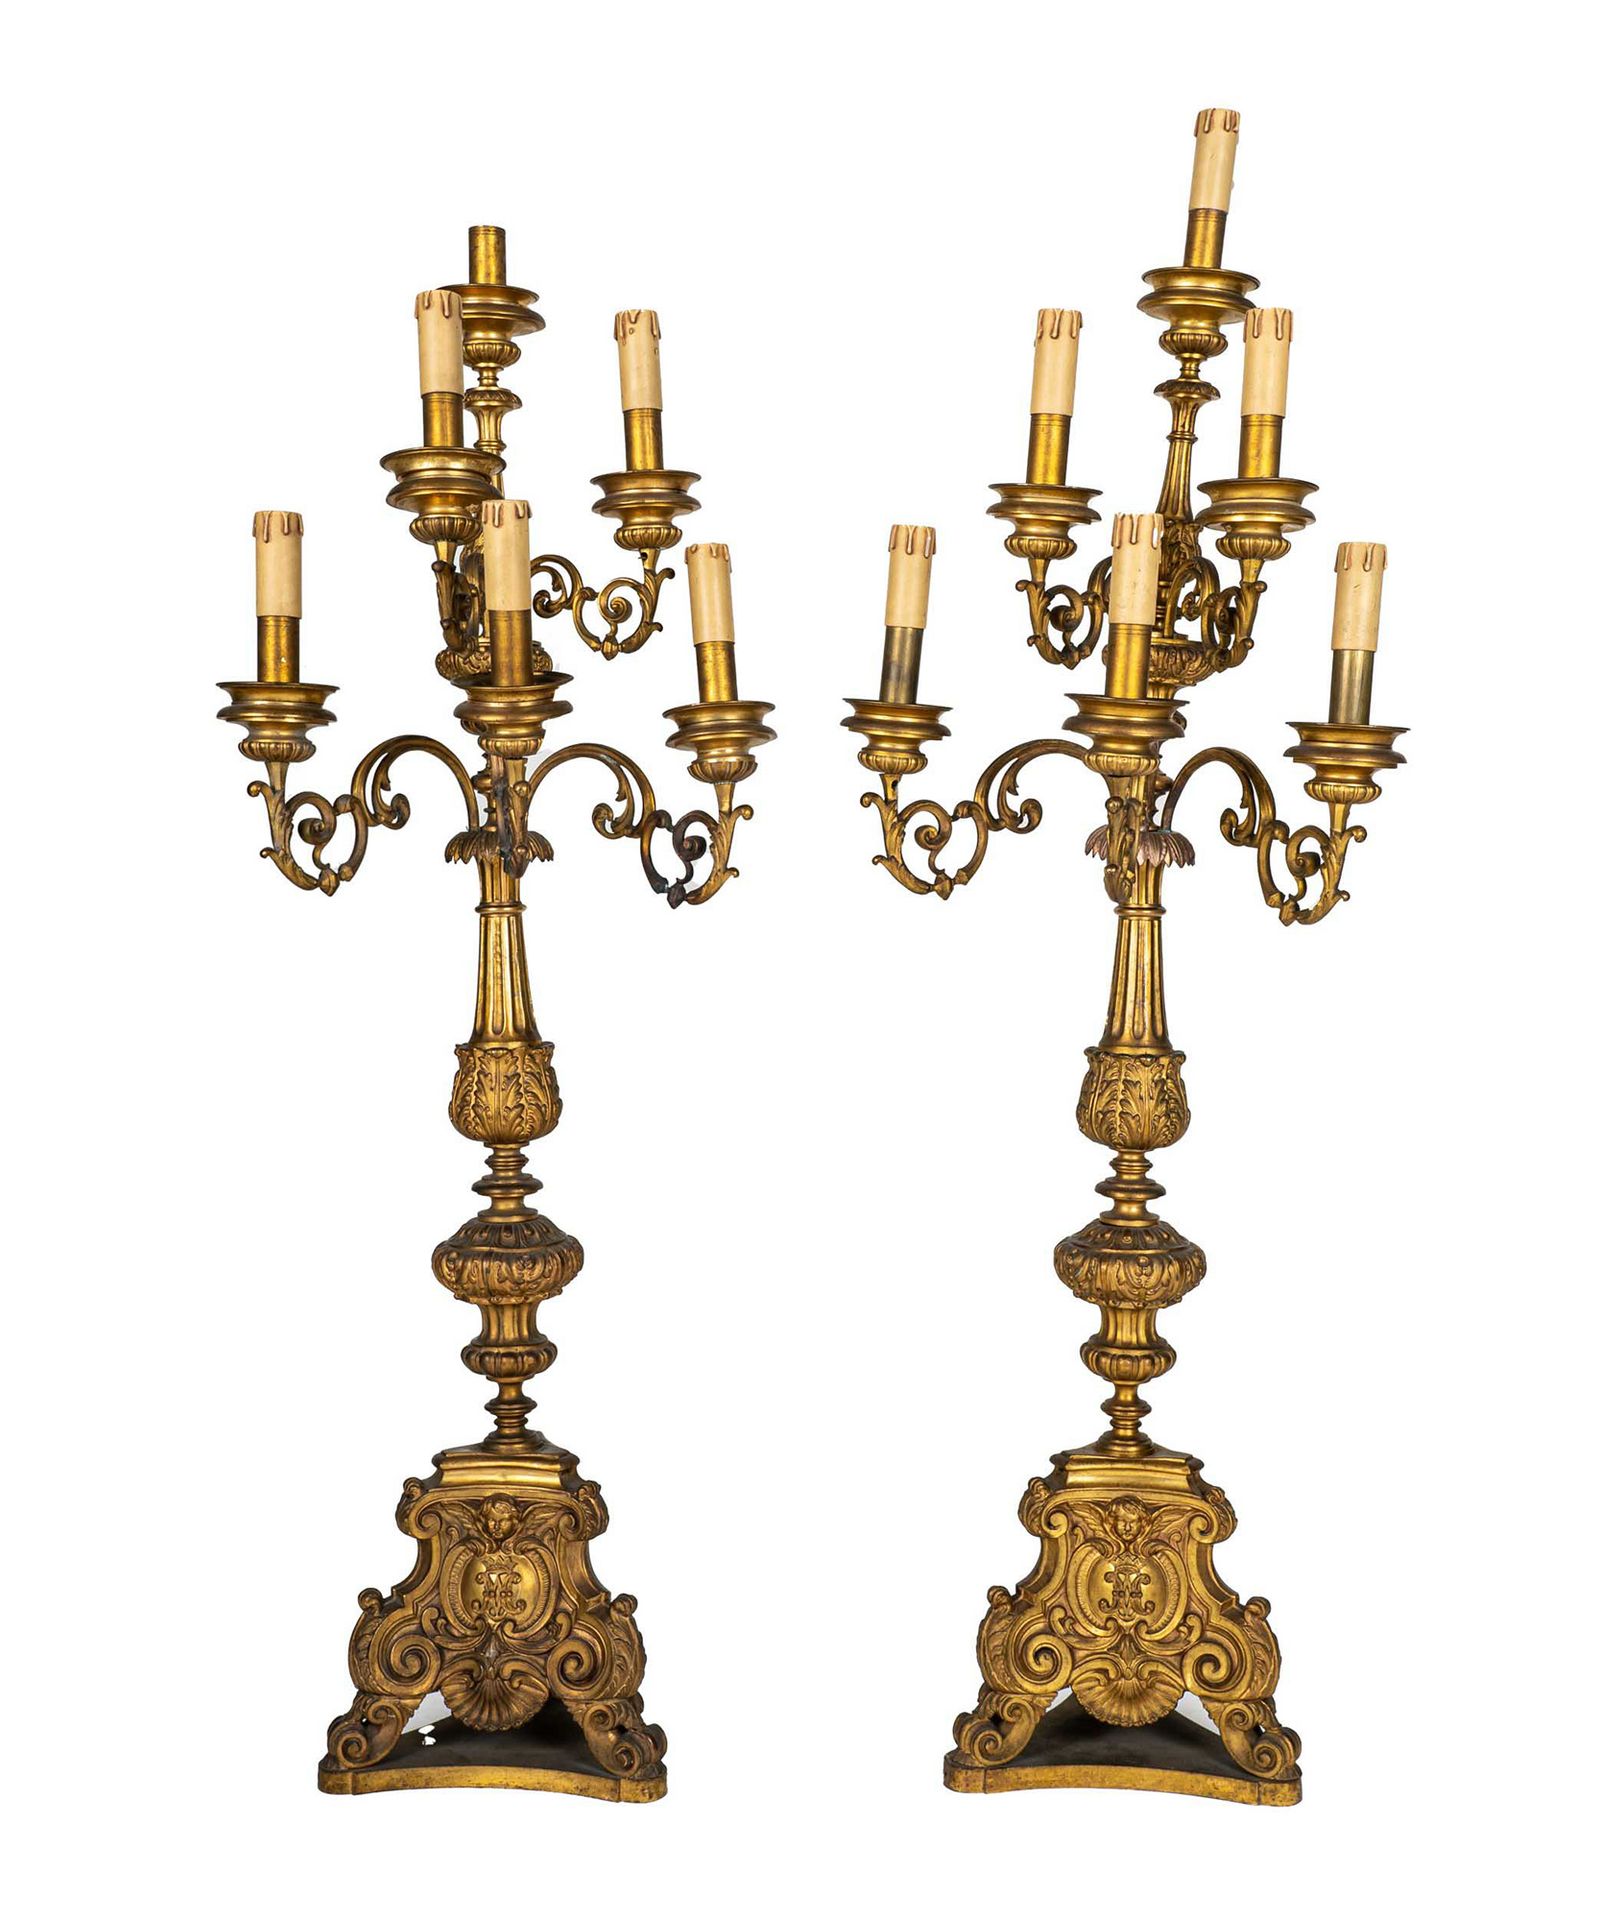 Null 一对大烛台

19世纪初

镀金青铜，扇形栏杆轴饰有叶子图案，三层的五个烛台臂，三足鼎立的底座上饰有贝壳和高浮雕的小天使。

高134厘米